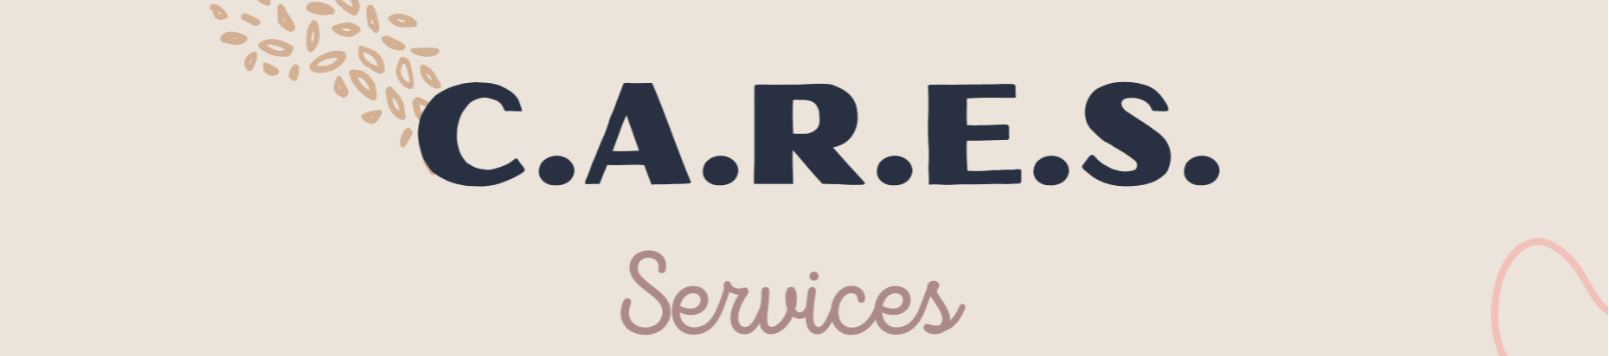 cares services